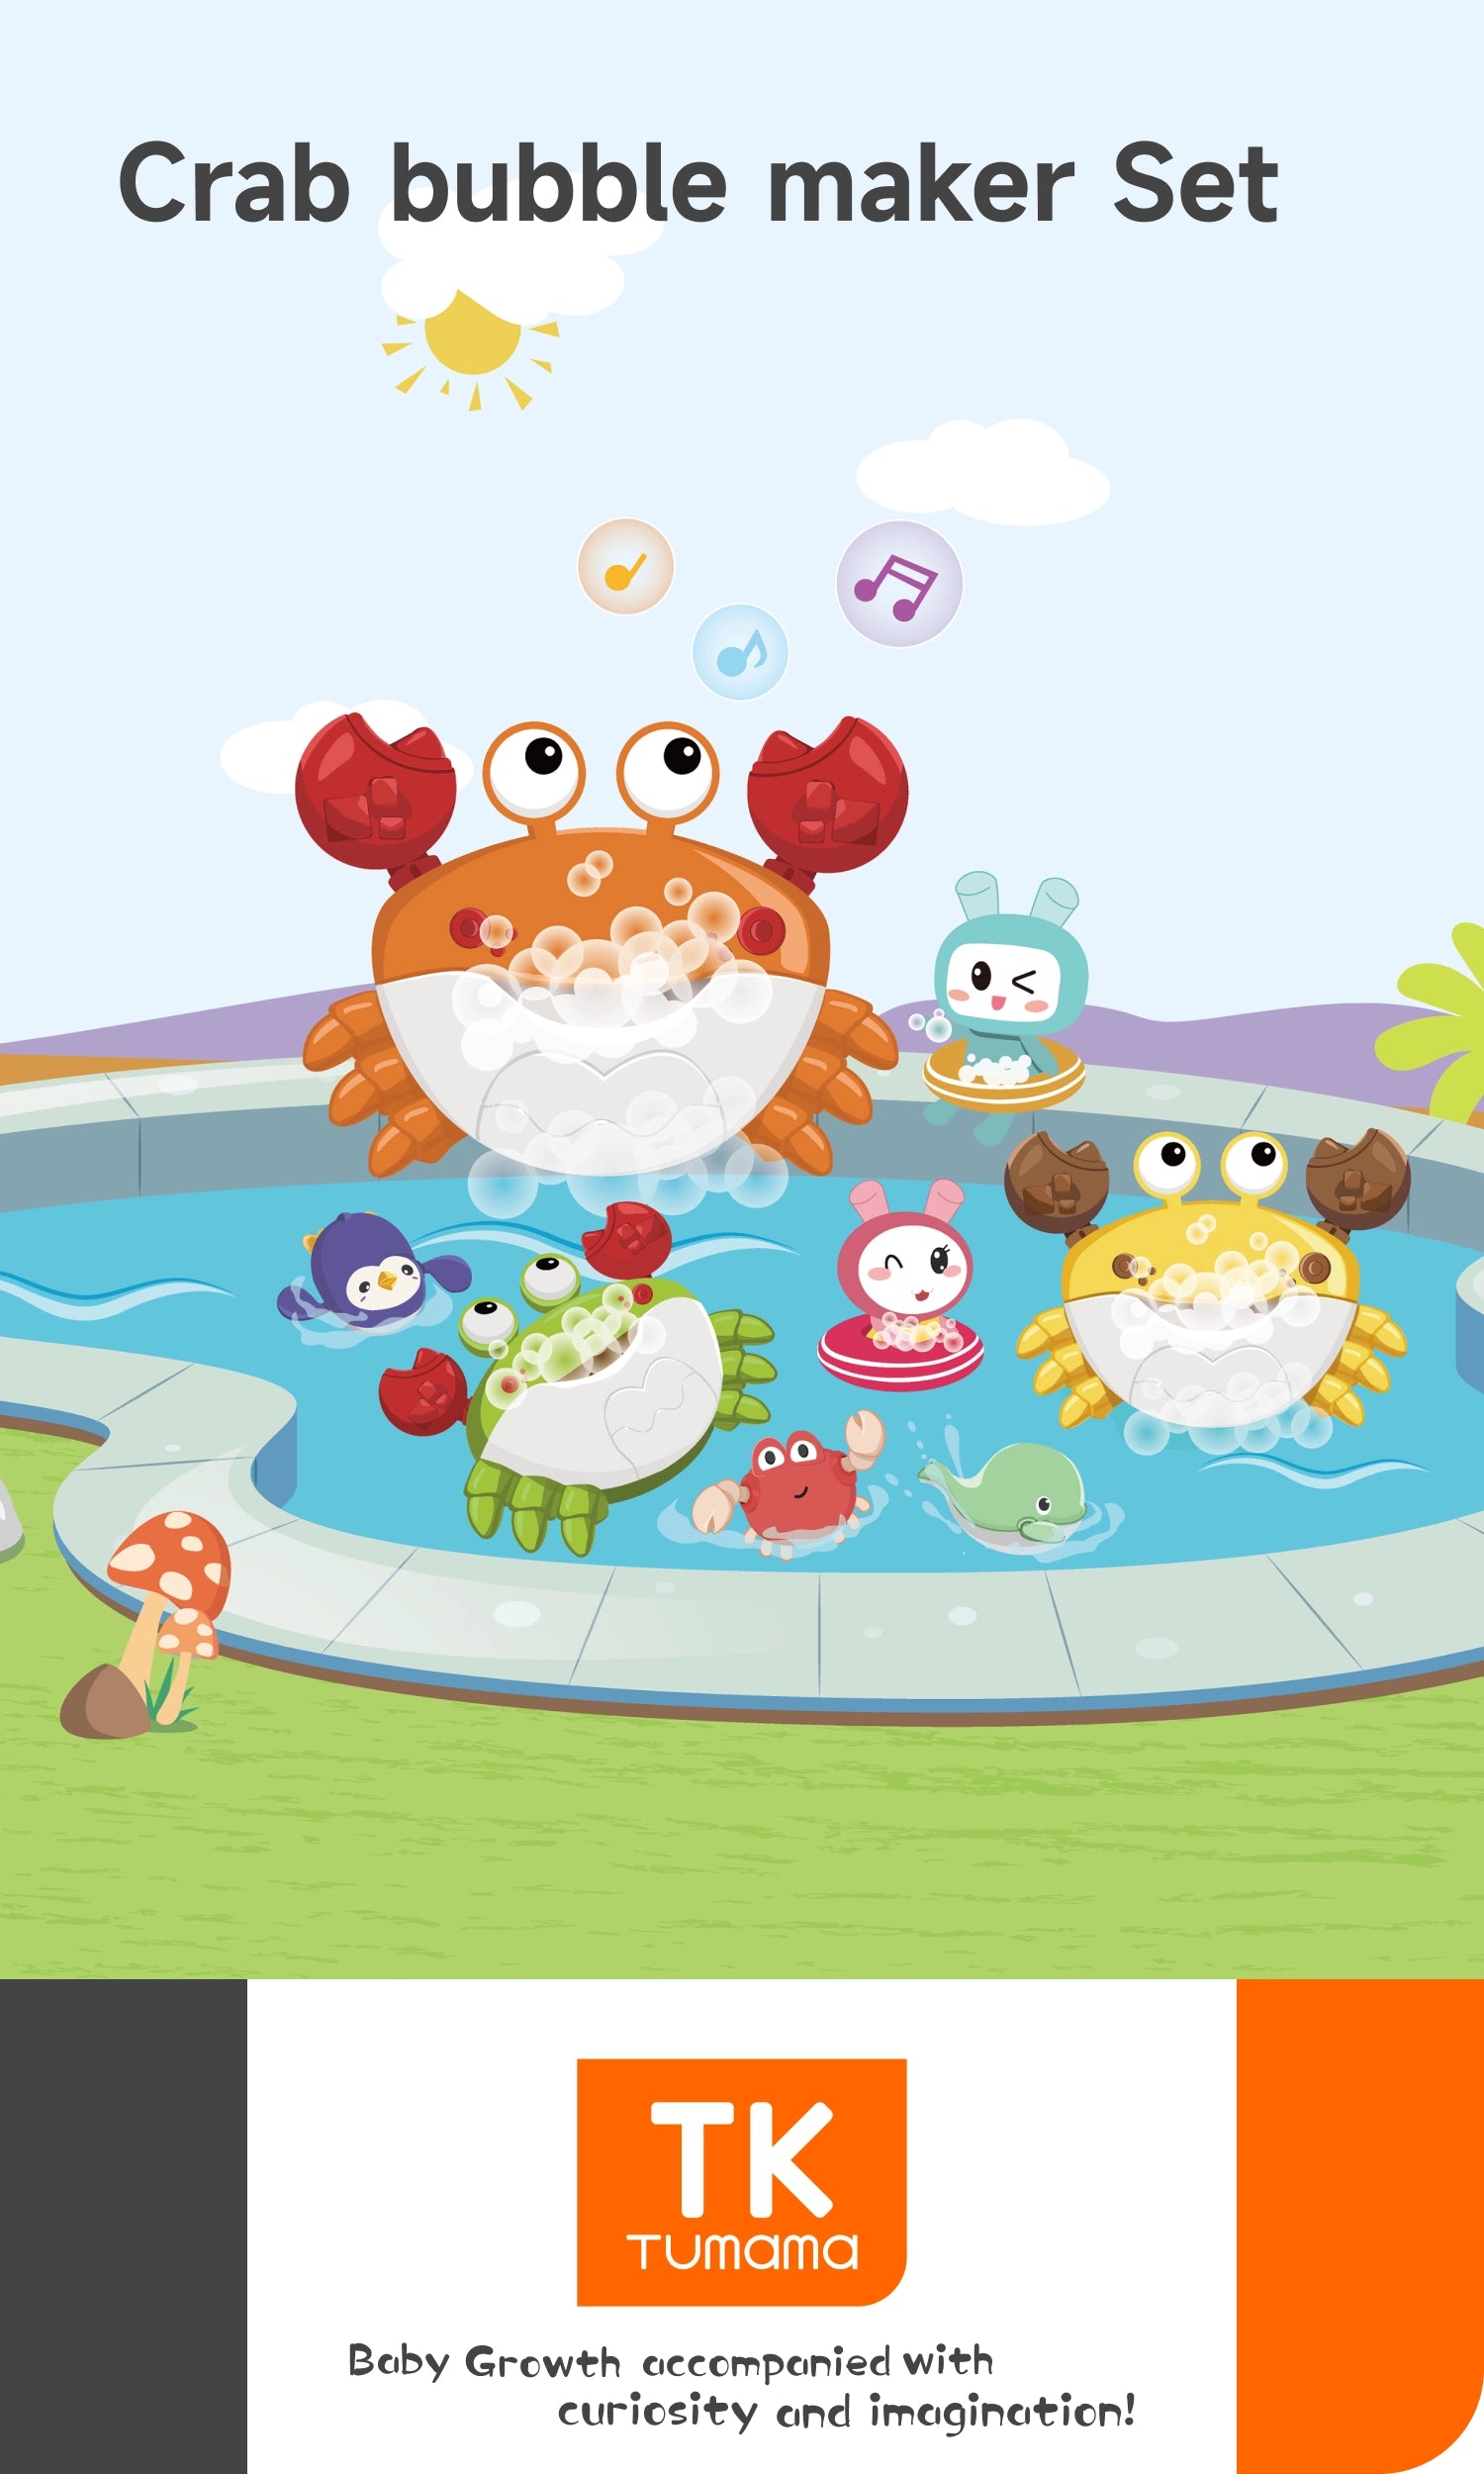 Bubble bathtub toys set with automatic crab bubble maker